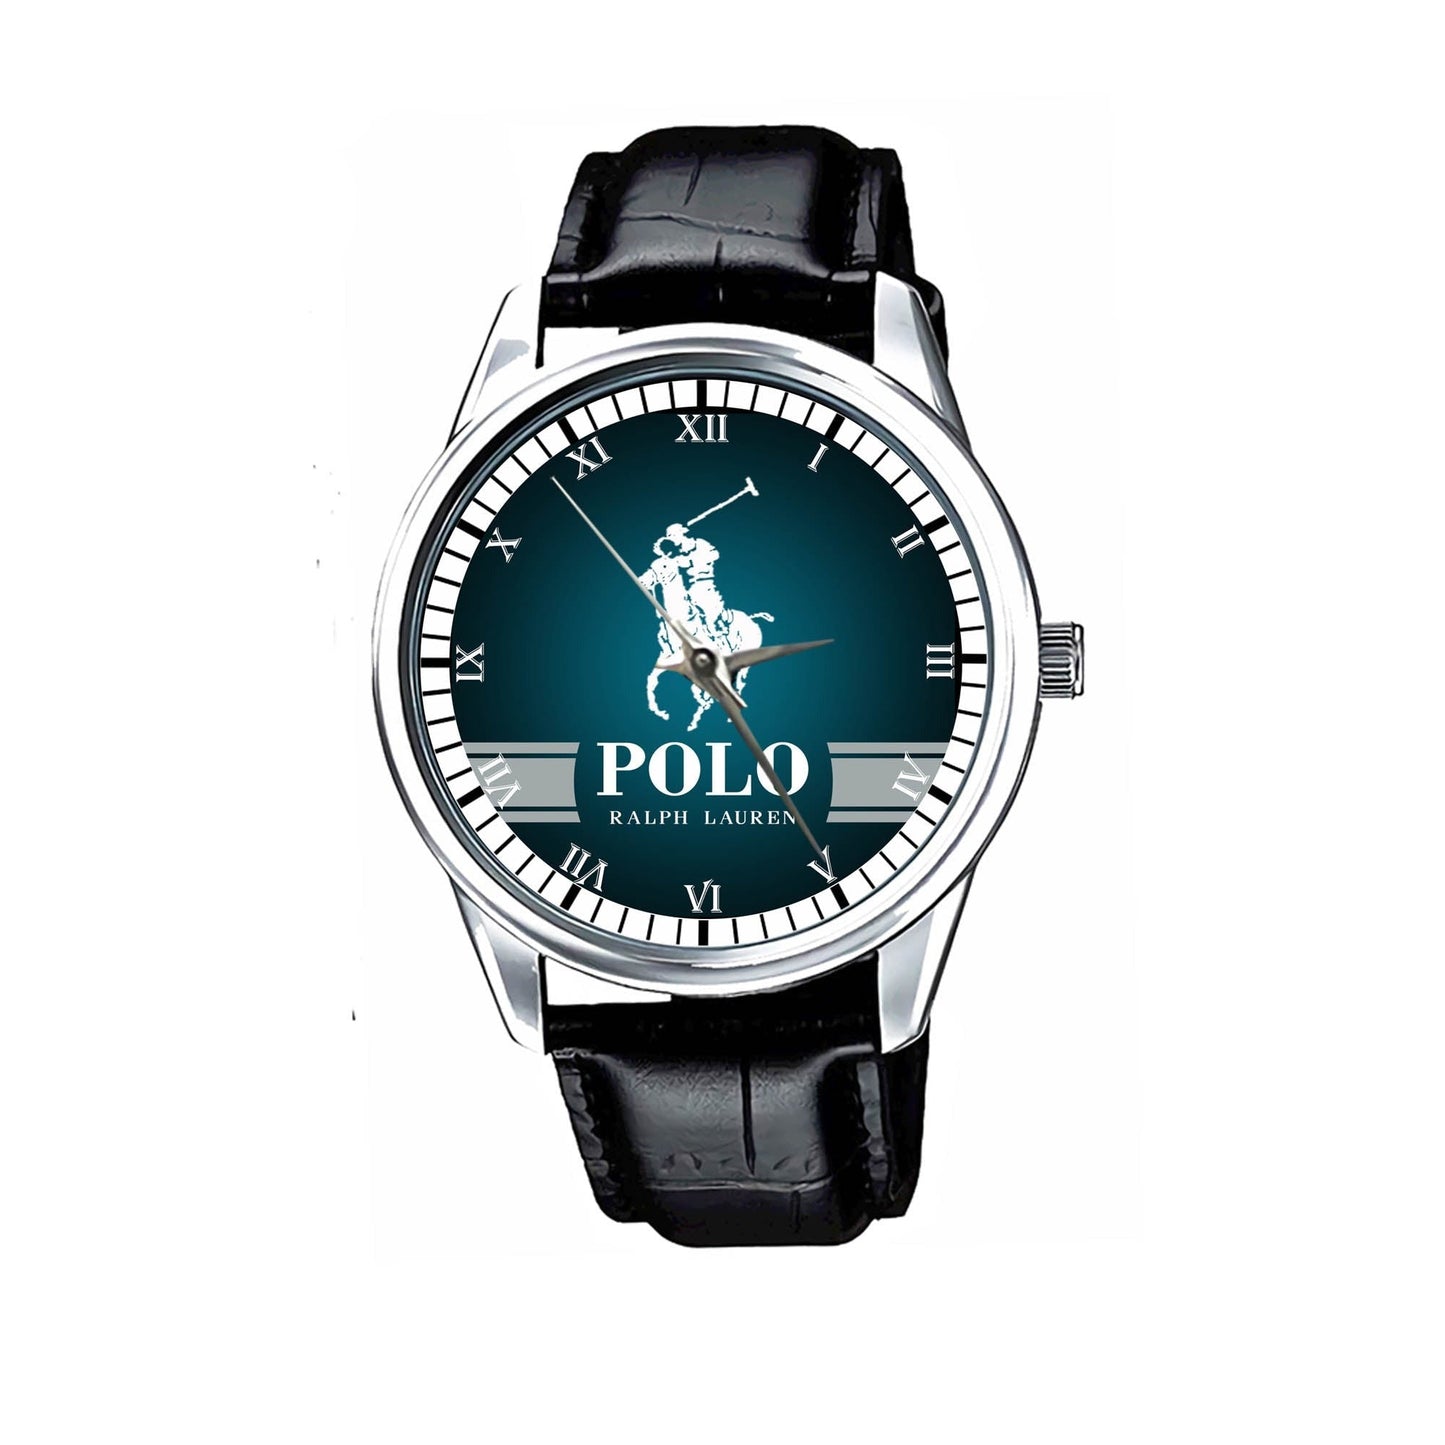 Polo Ralph Lauren Watches KP31